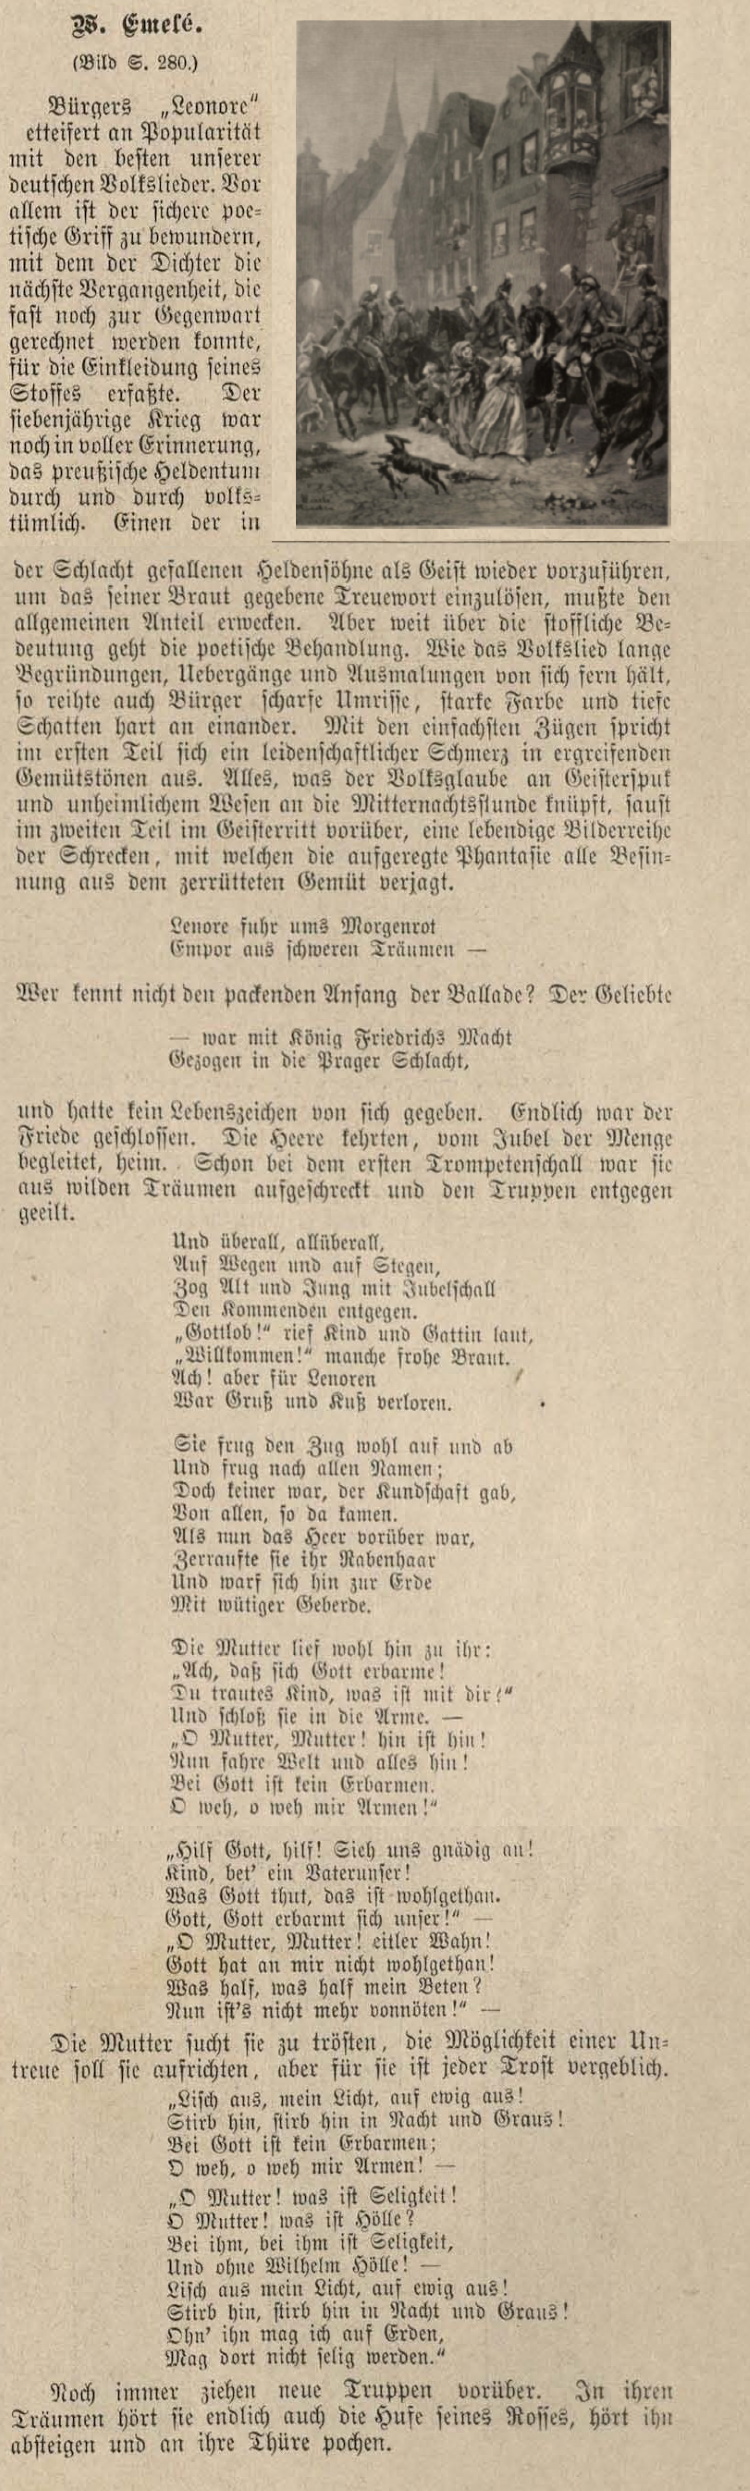 illustrierte_welt_text_1892